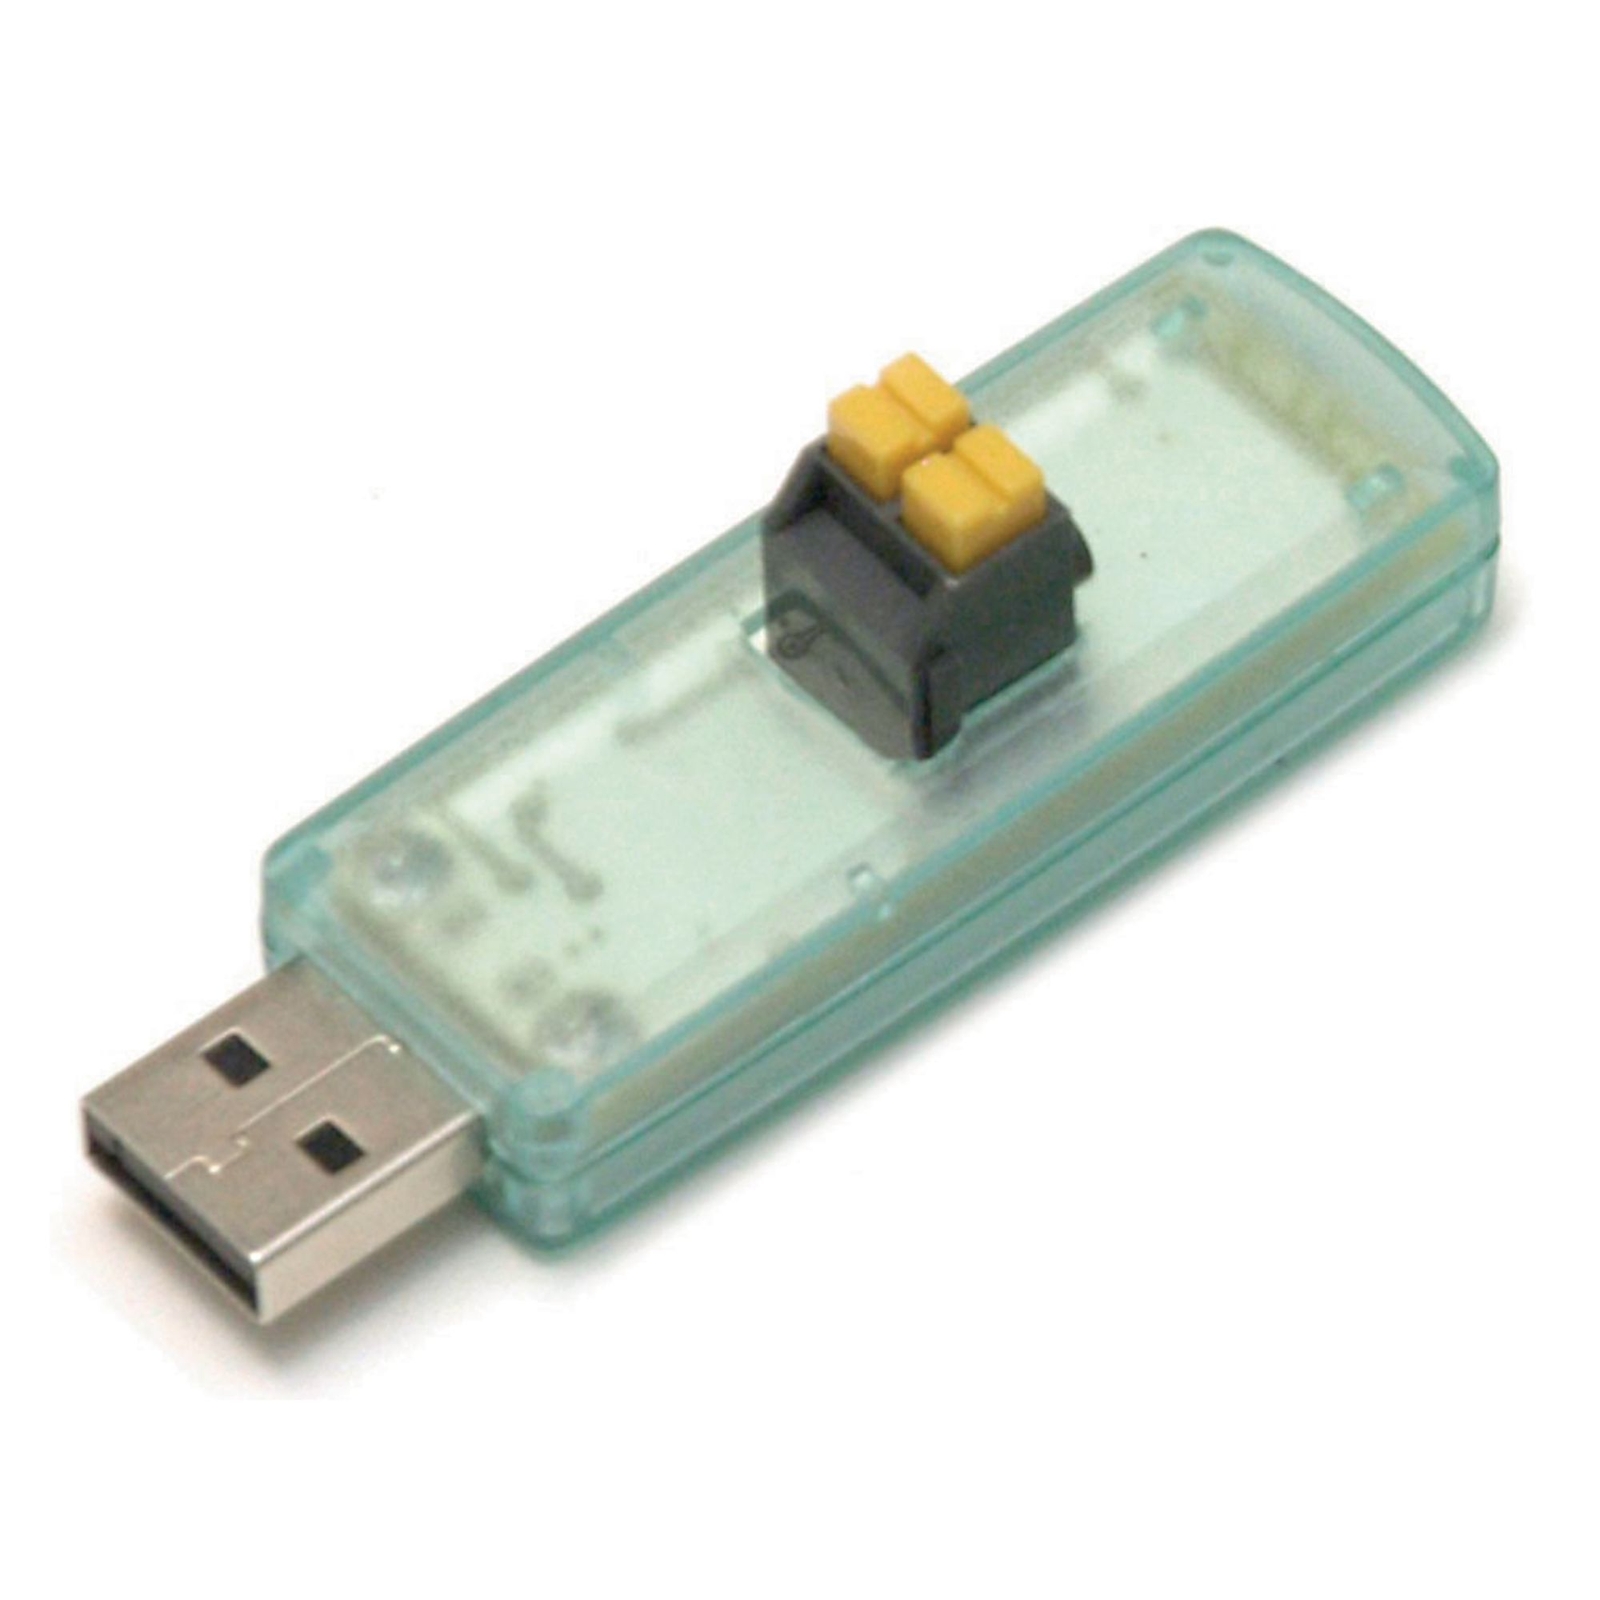 Mini USB Voltage Data Logger